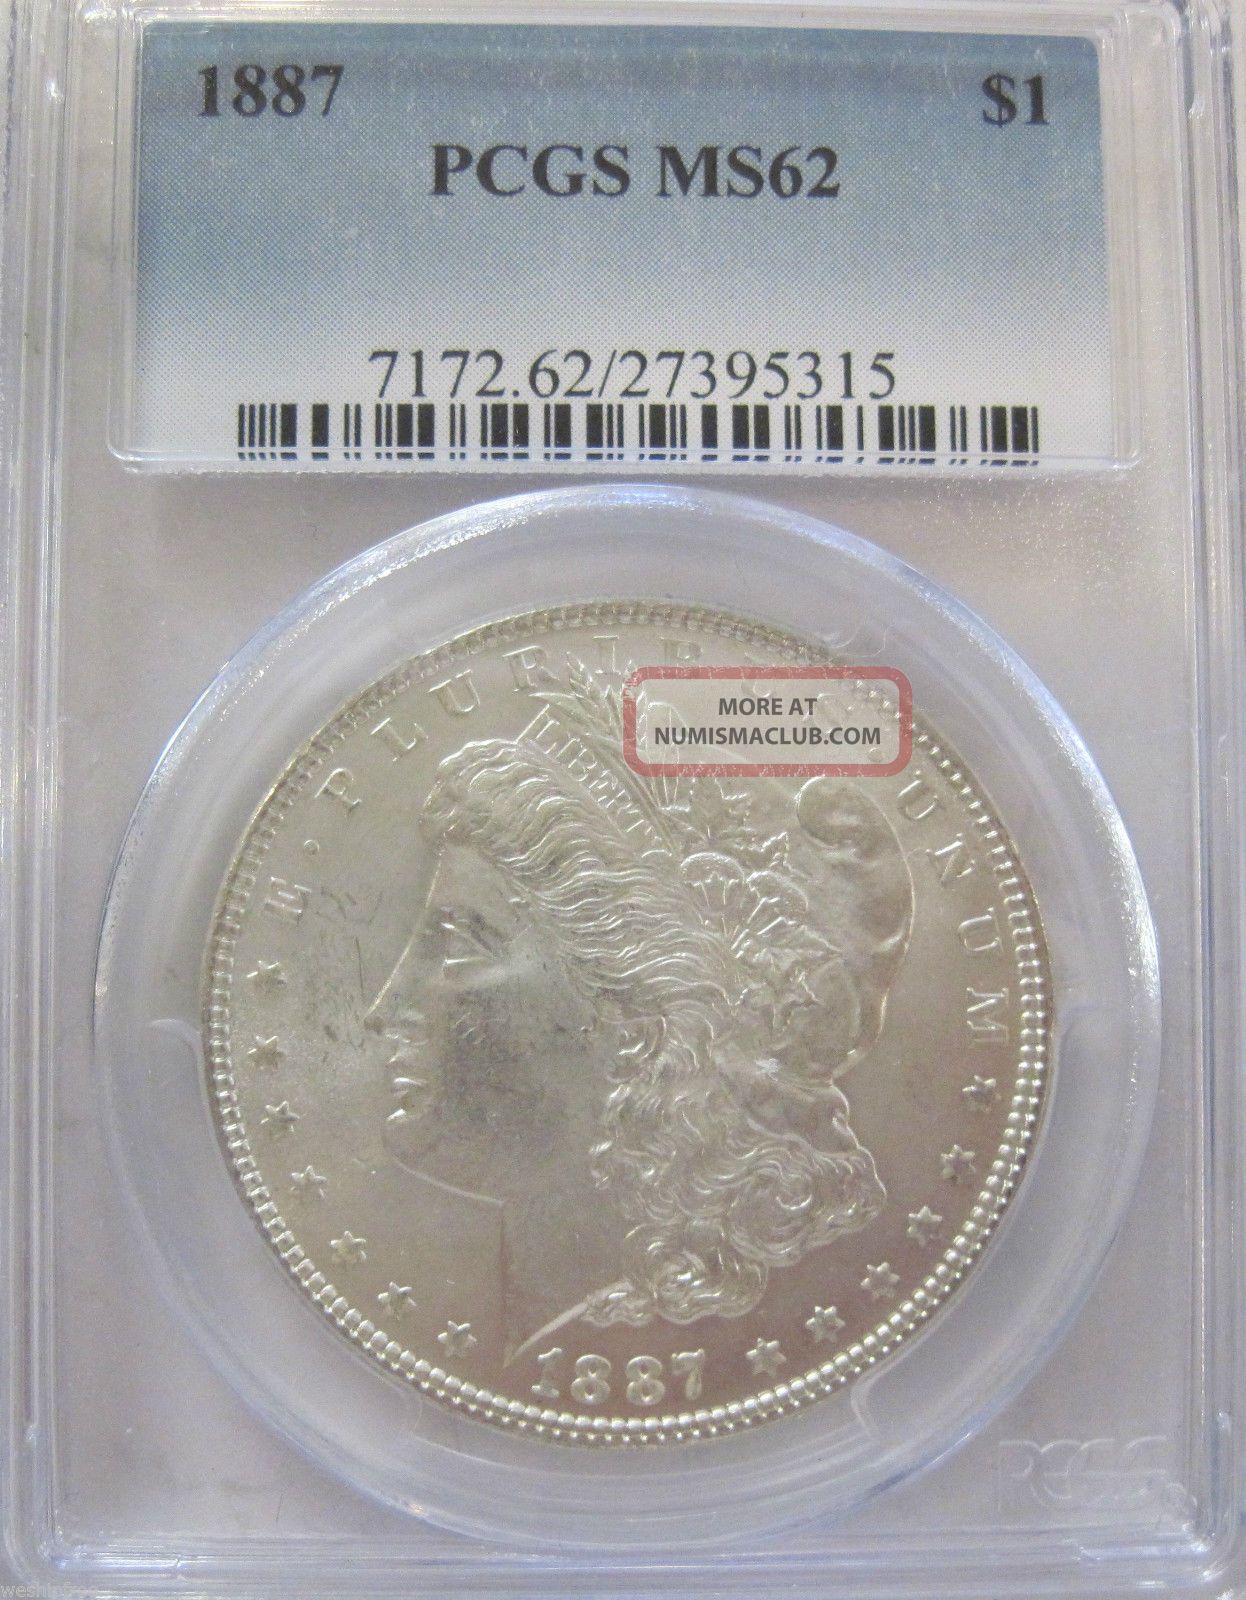 Pcgs 1887 Silver Morgan Dollar Ms62 (822h)